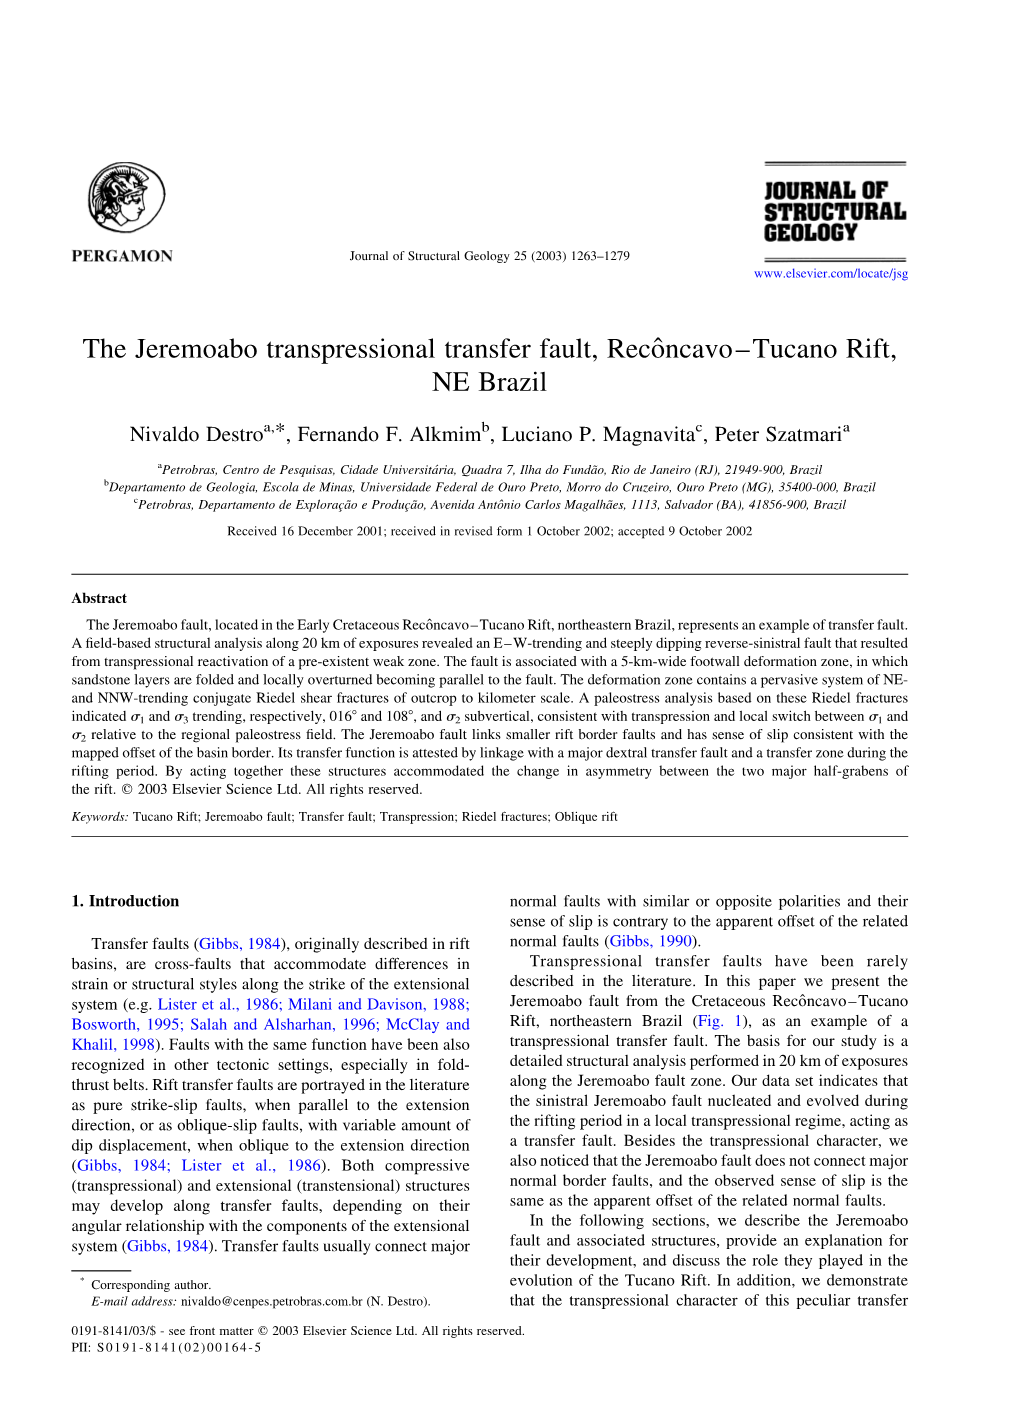 The Jeremoabo Transpressional Transfer Fault, Recoˆncavo–Tucano Rift, NE Brazil